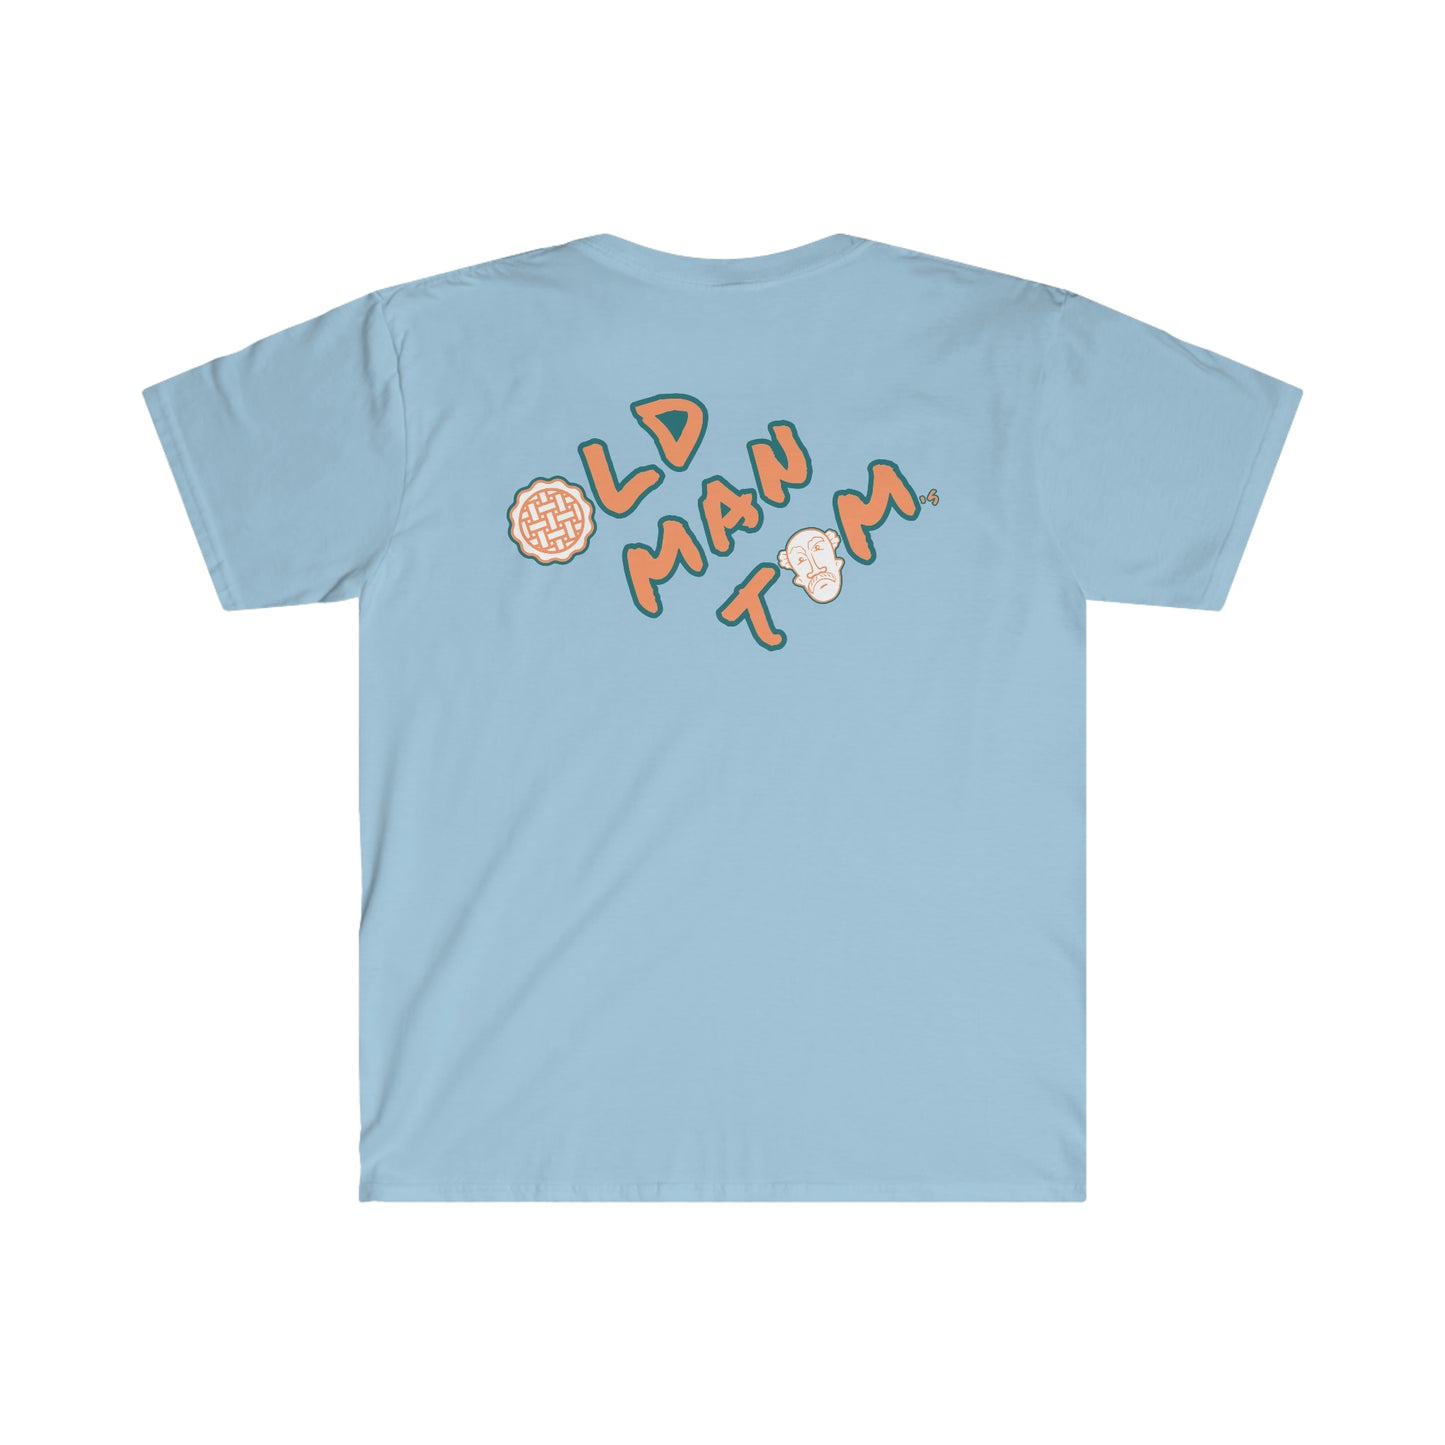 Old Man Tom's "Falling" Unisex Softstyle T-Shirt